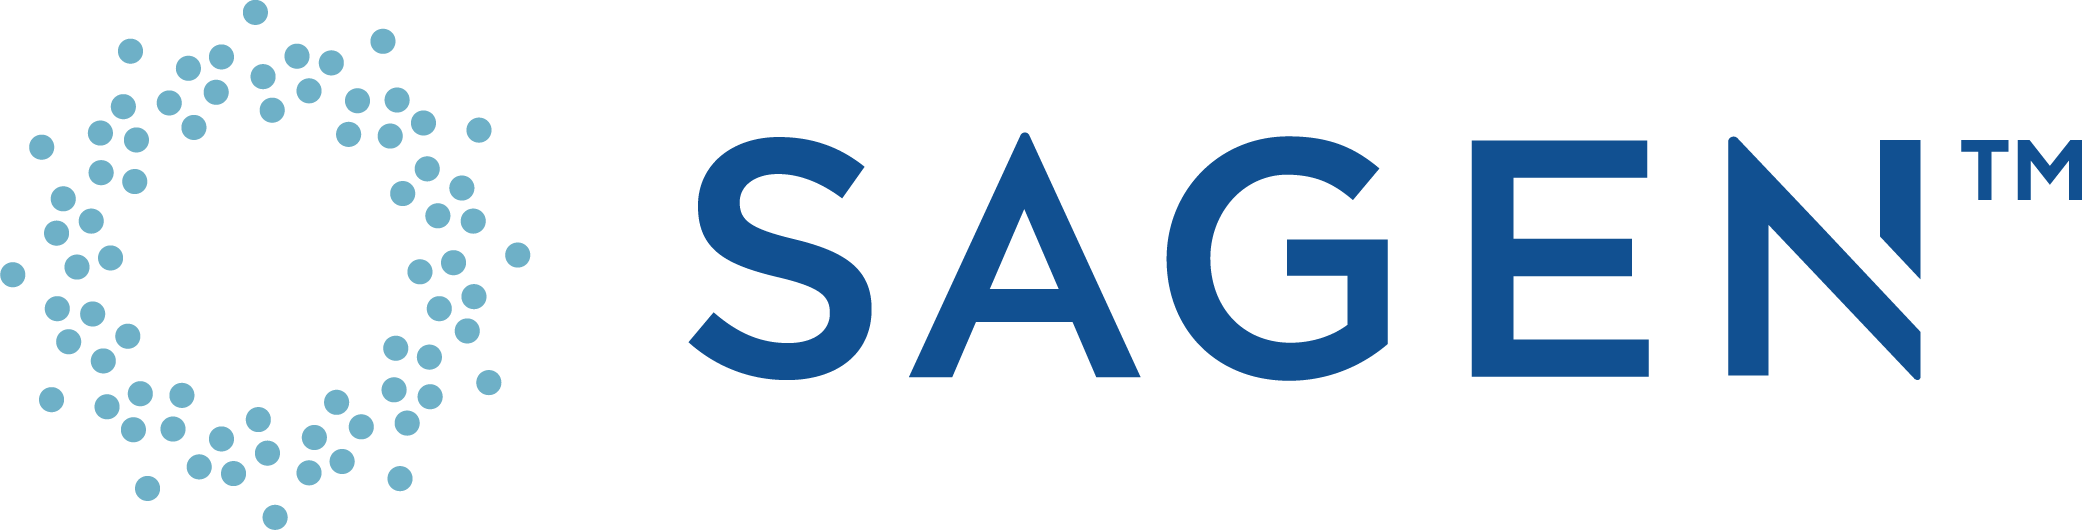 sagen-logo-TM_light-bg-1.png